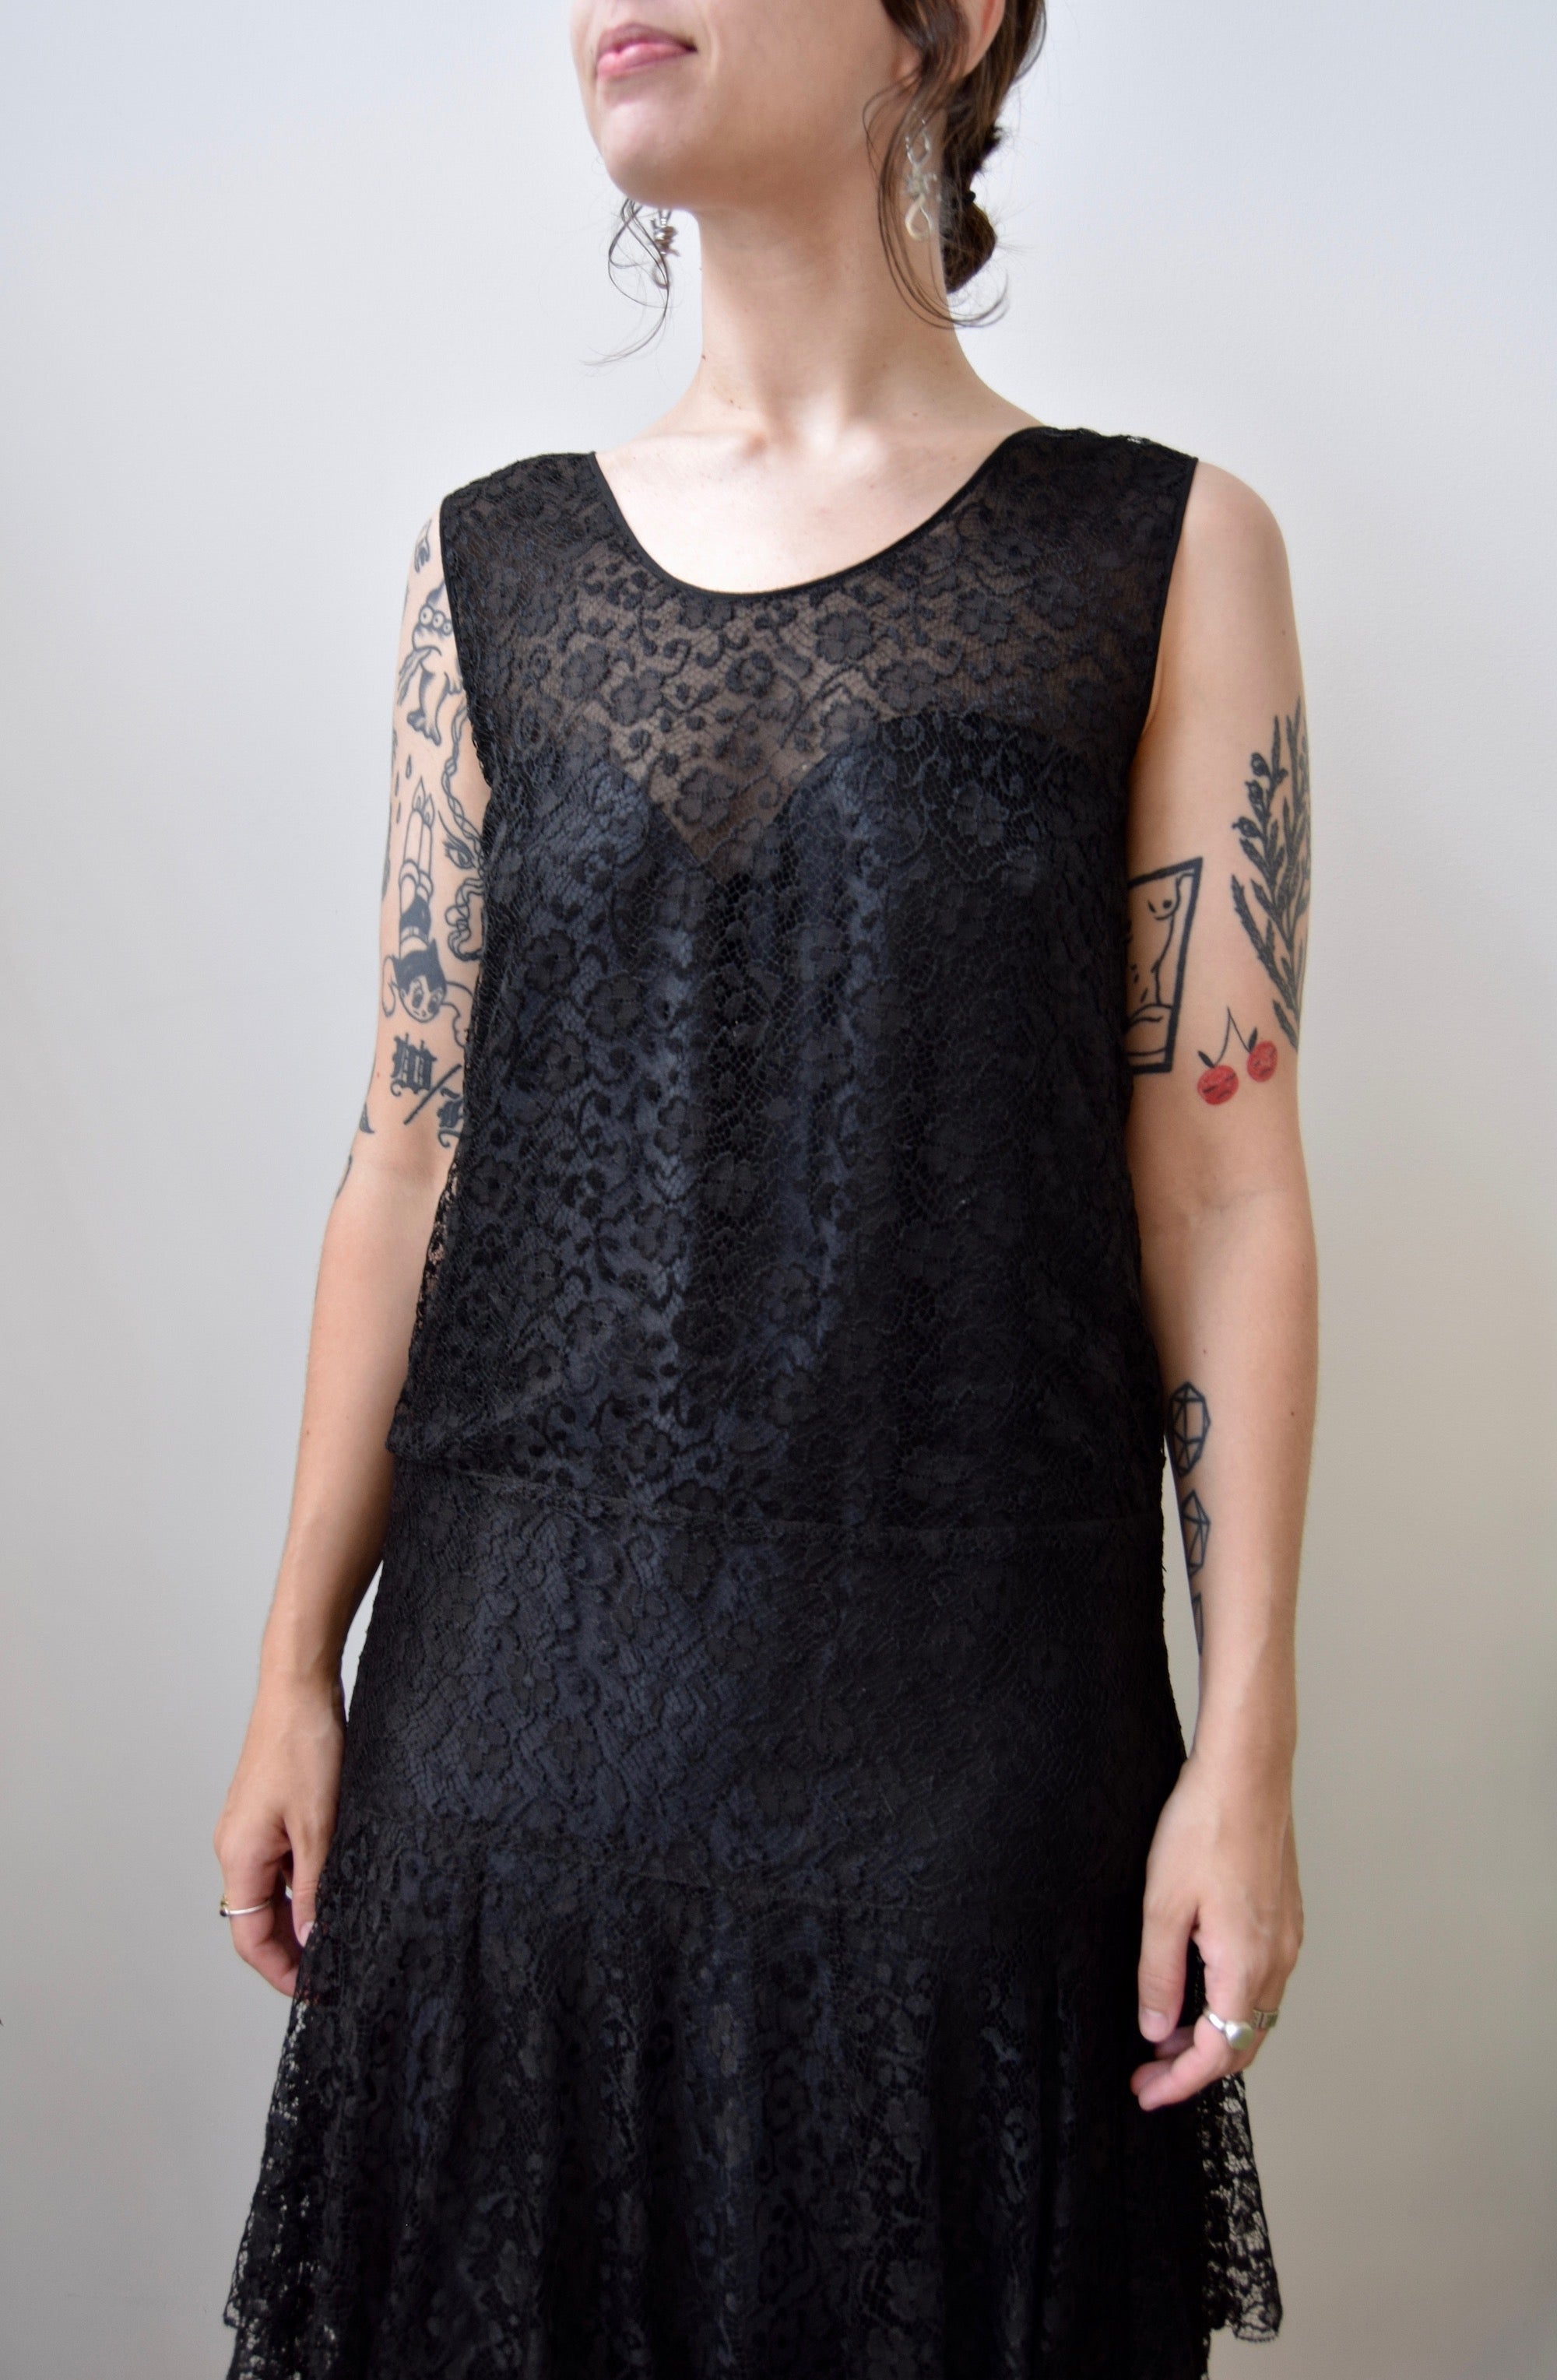 Twenties Black Lace Dress